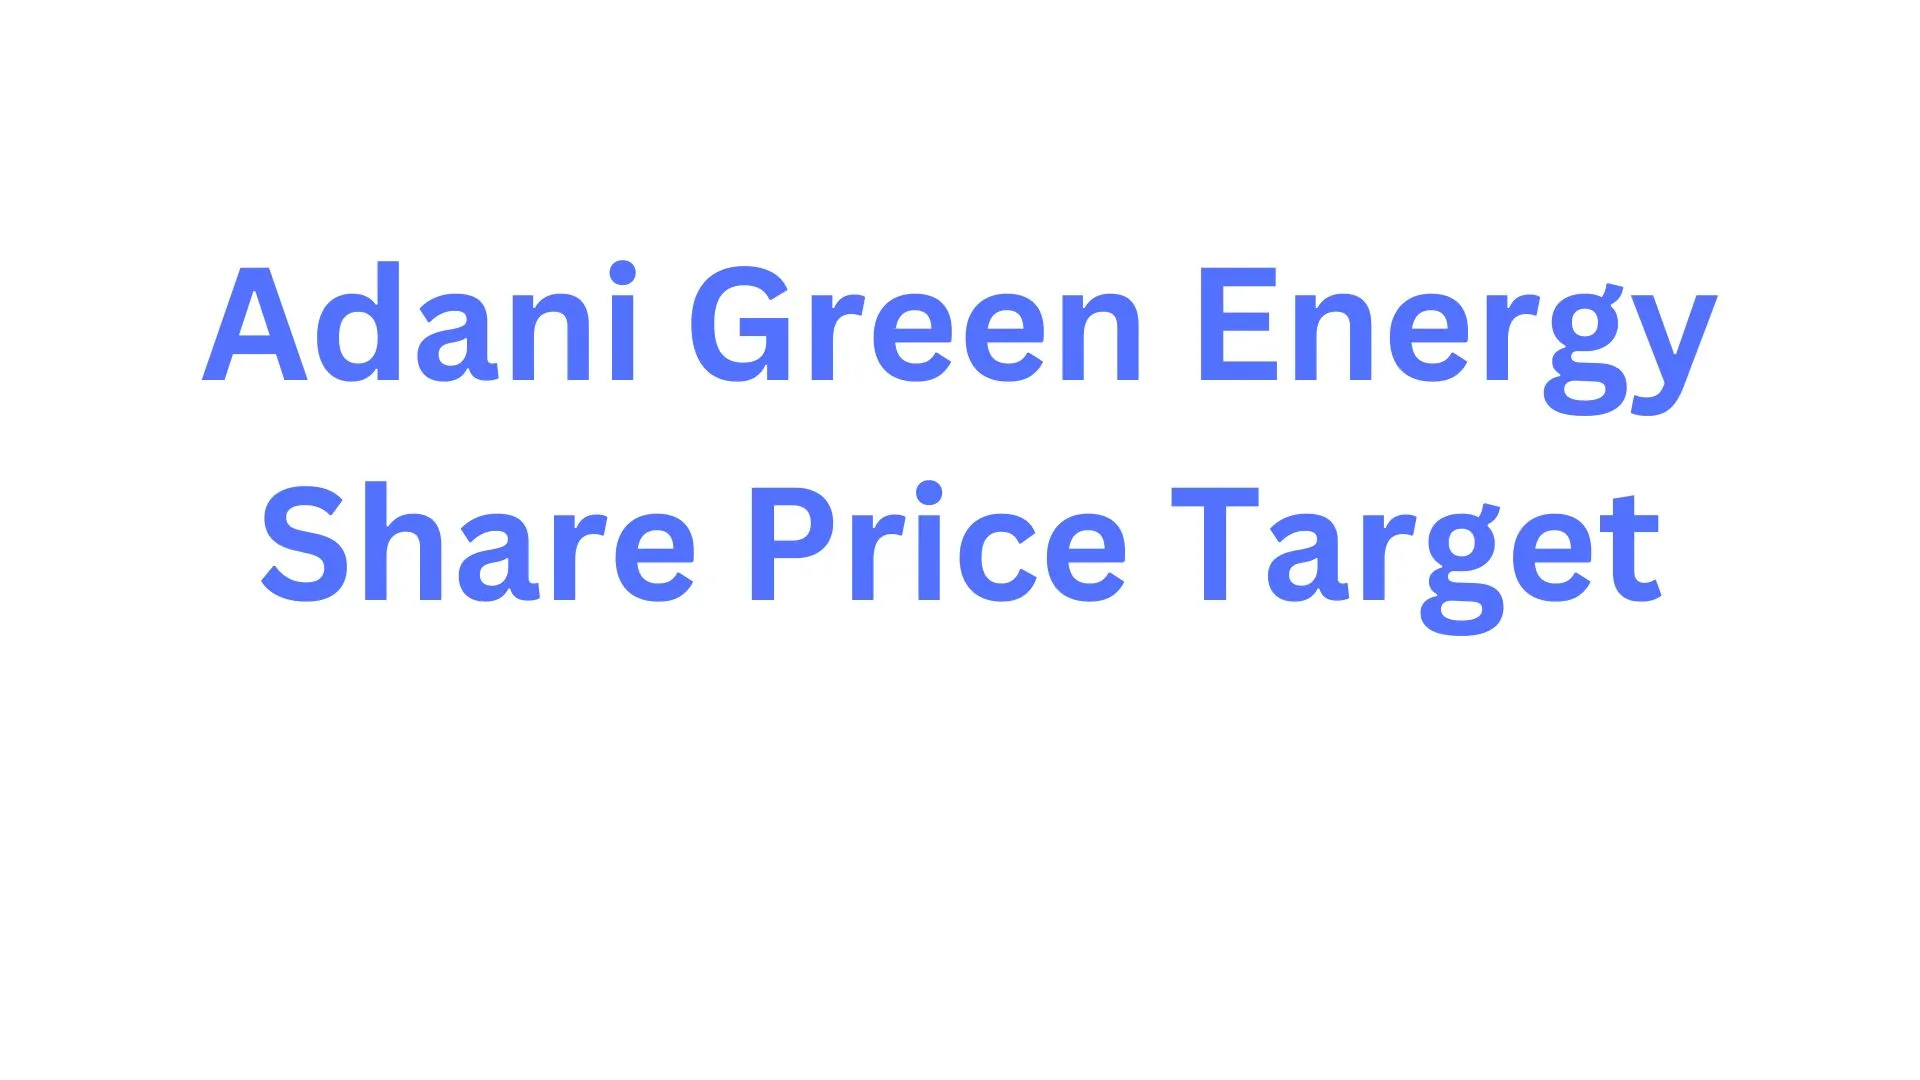 Adani Green Energy Share Price Target